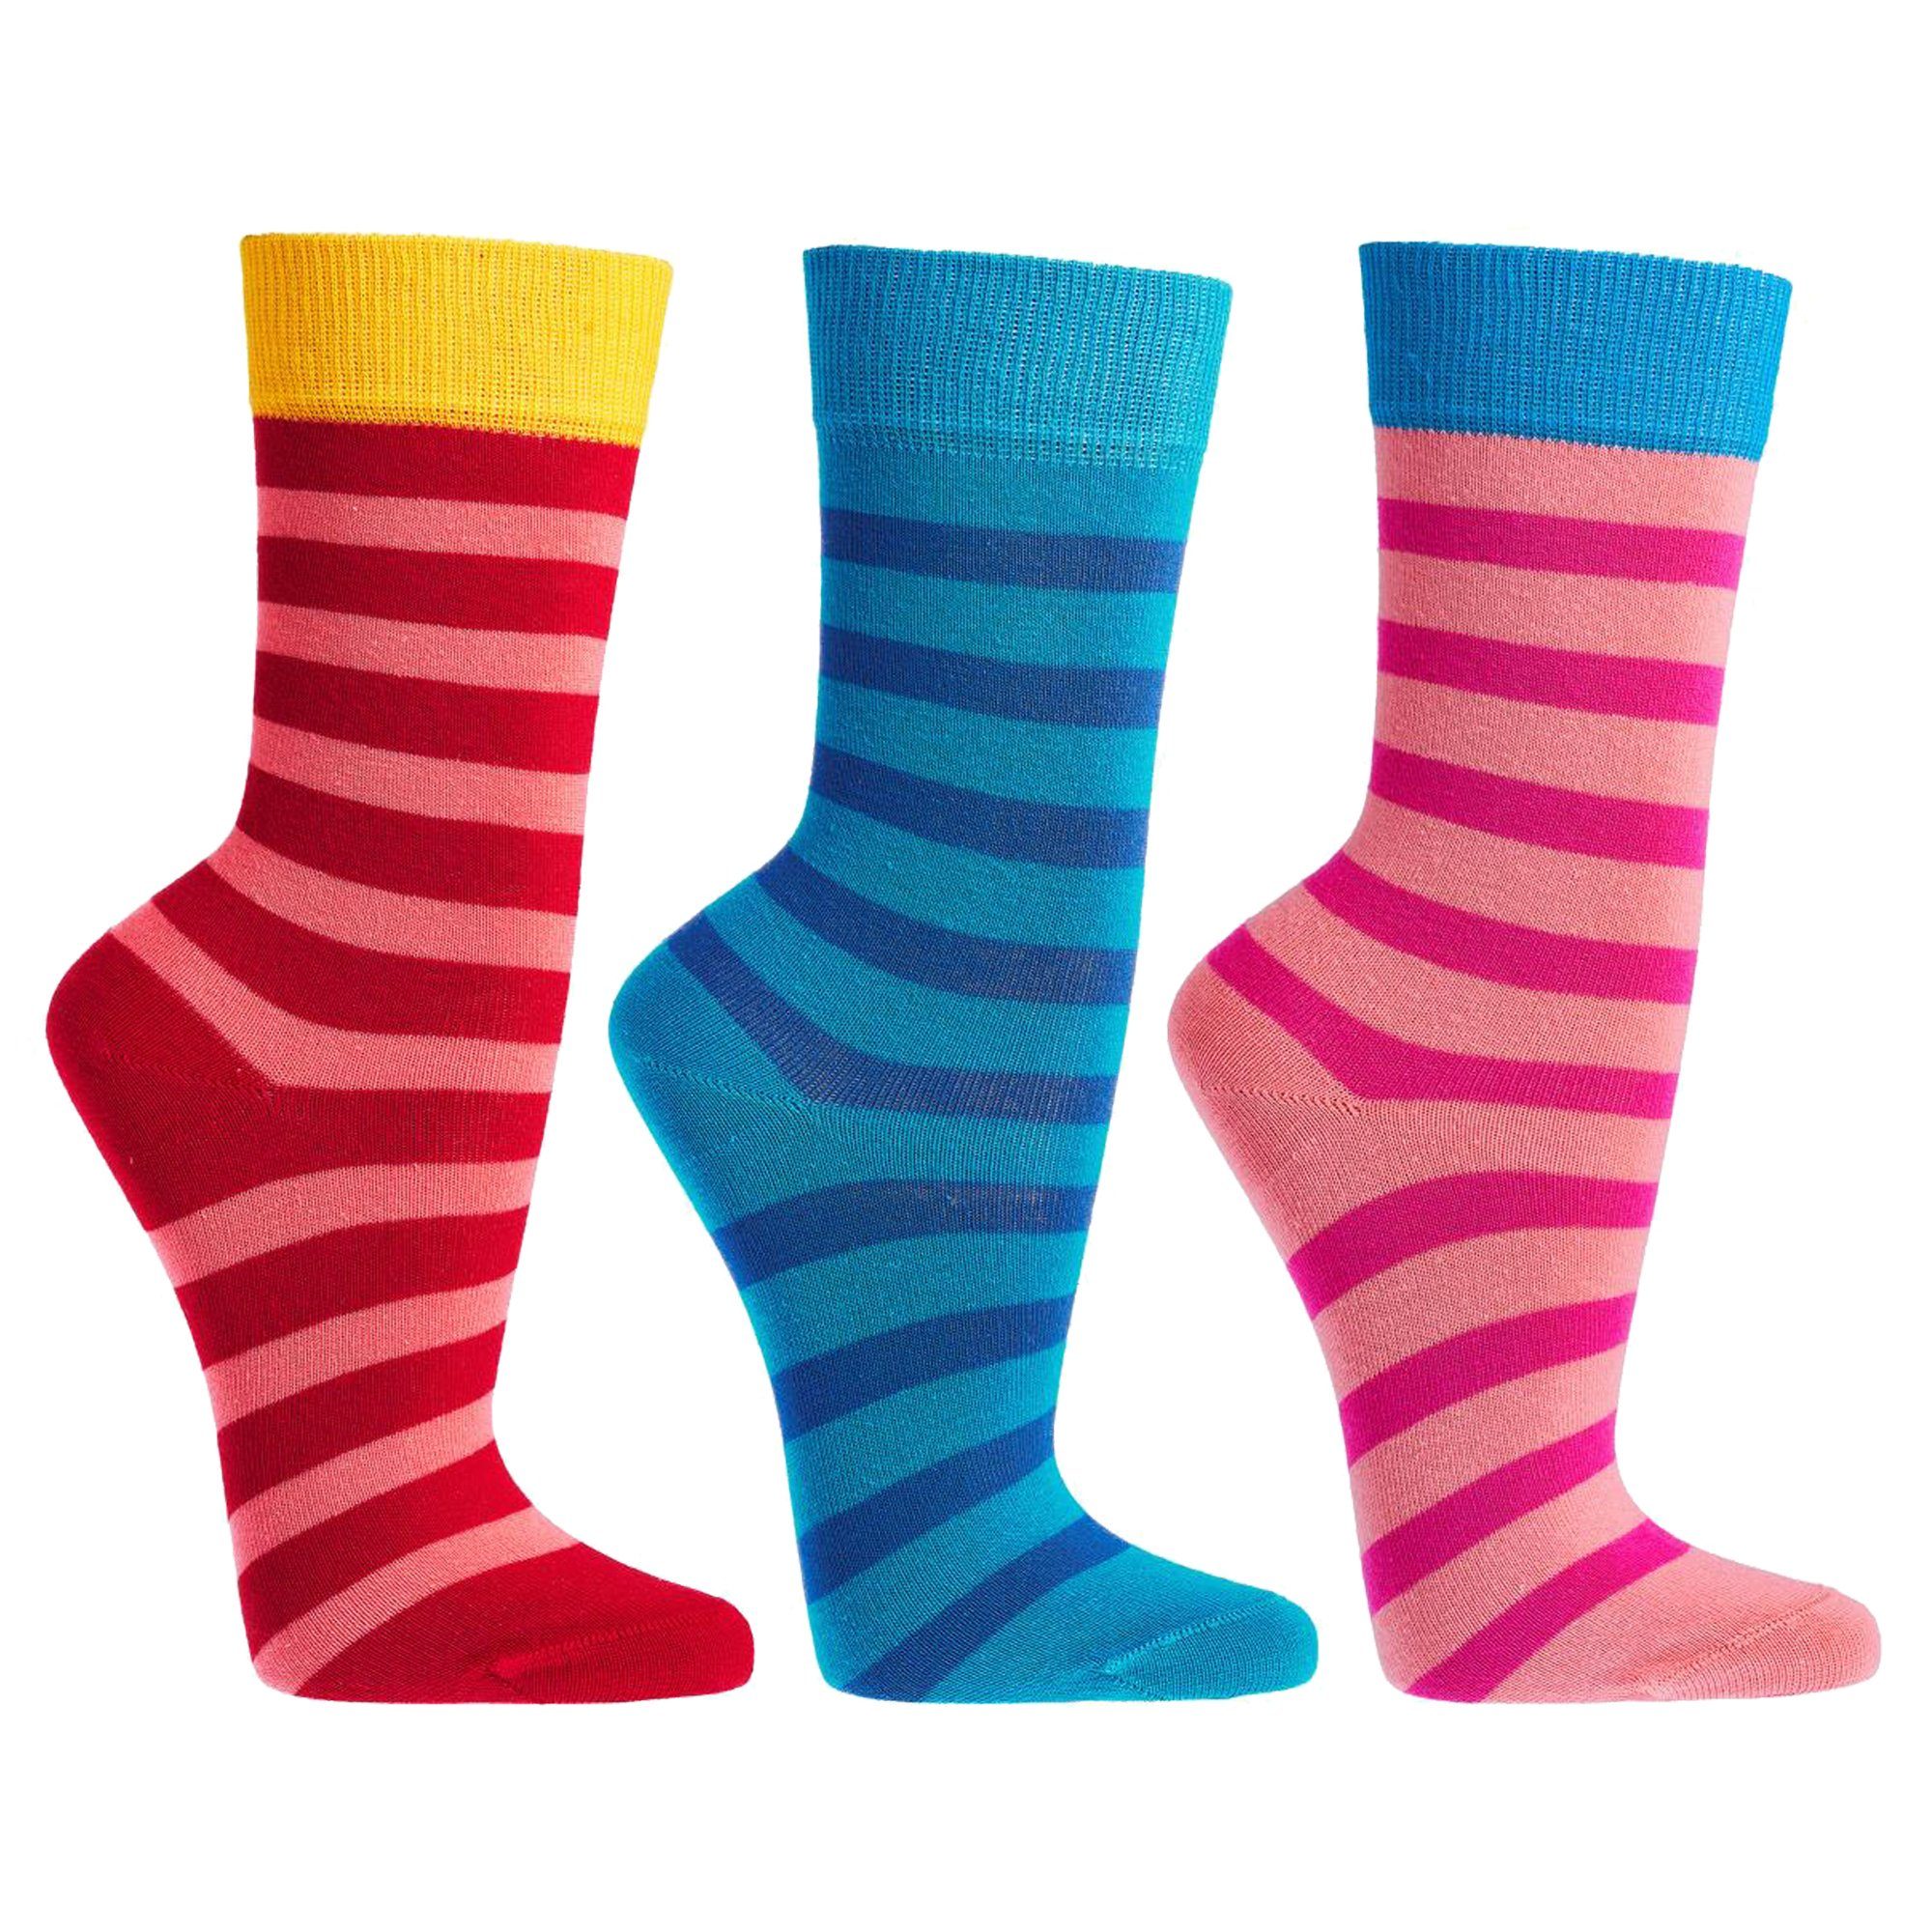 Socks 4 Fun Langsocken 3694 (Packung, 6-Paar, 6 Paar) Kinder Socken mit Bio-Baumwolle, Jungen & Mädchen, Kindersocken rose+blau+rot